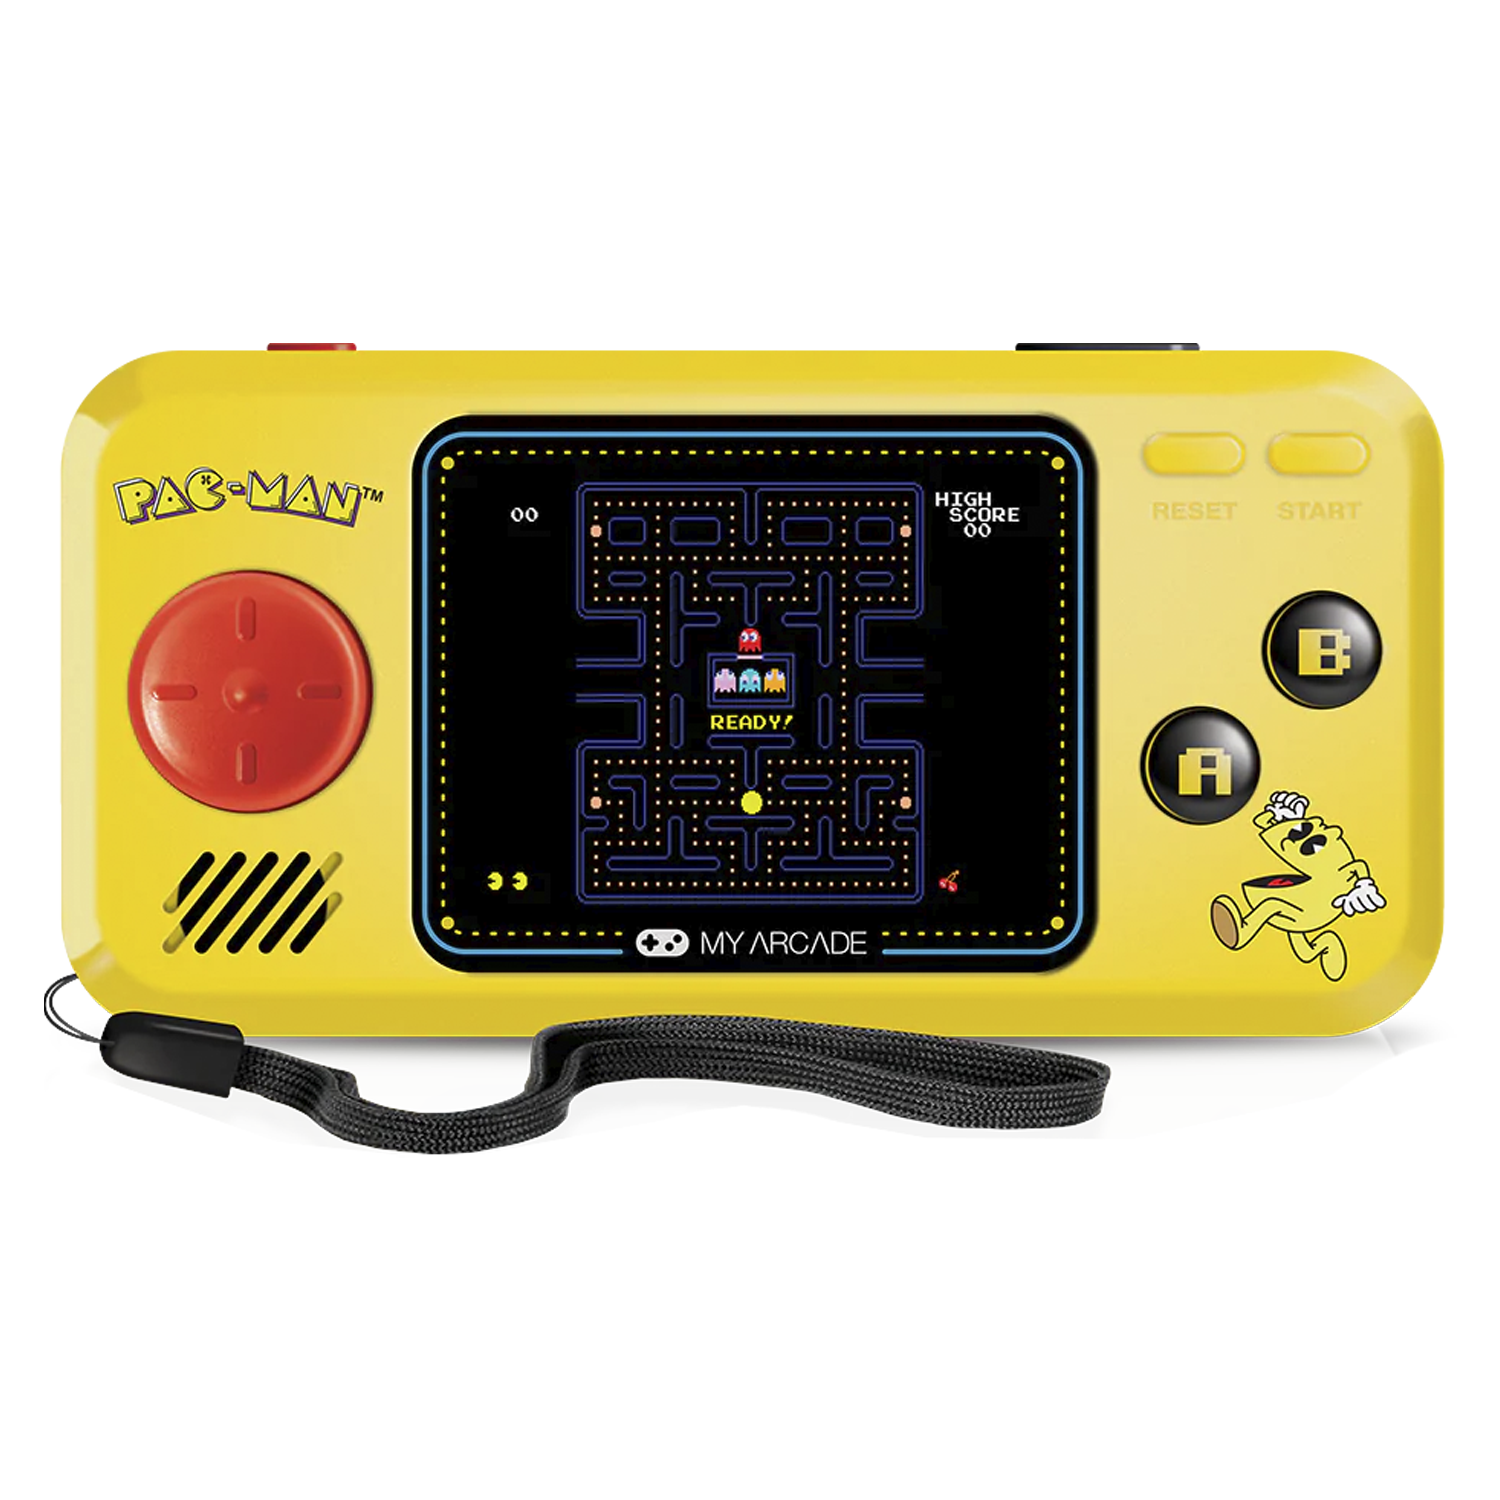 Console My Arcade PAC-MAN Pocket Player - Amarelo (DGUNL-3227)